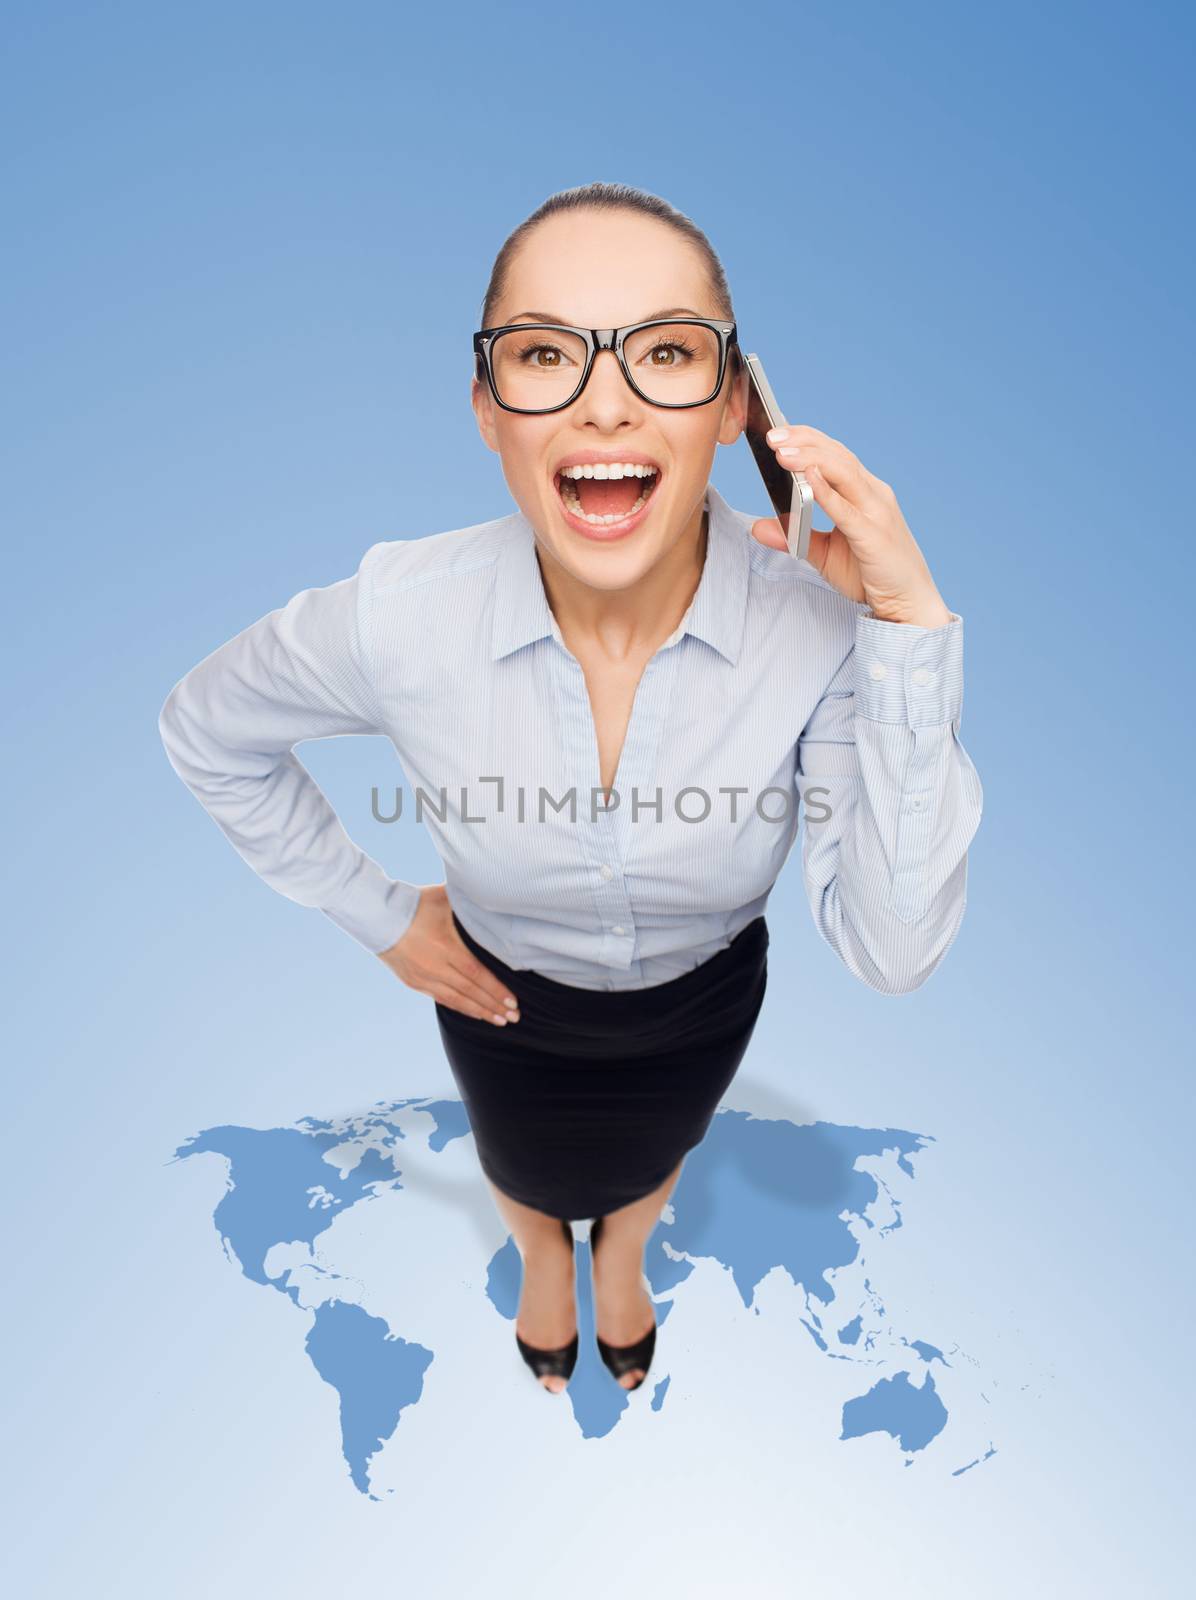 happy businesswoman in eyeglasses with smartphone by dolgachov